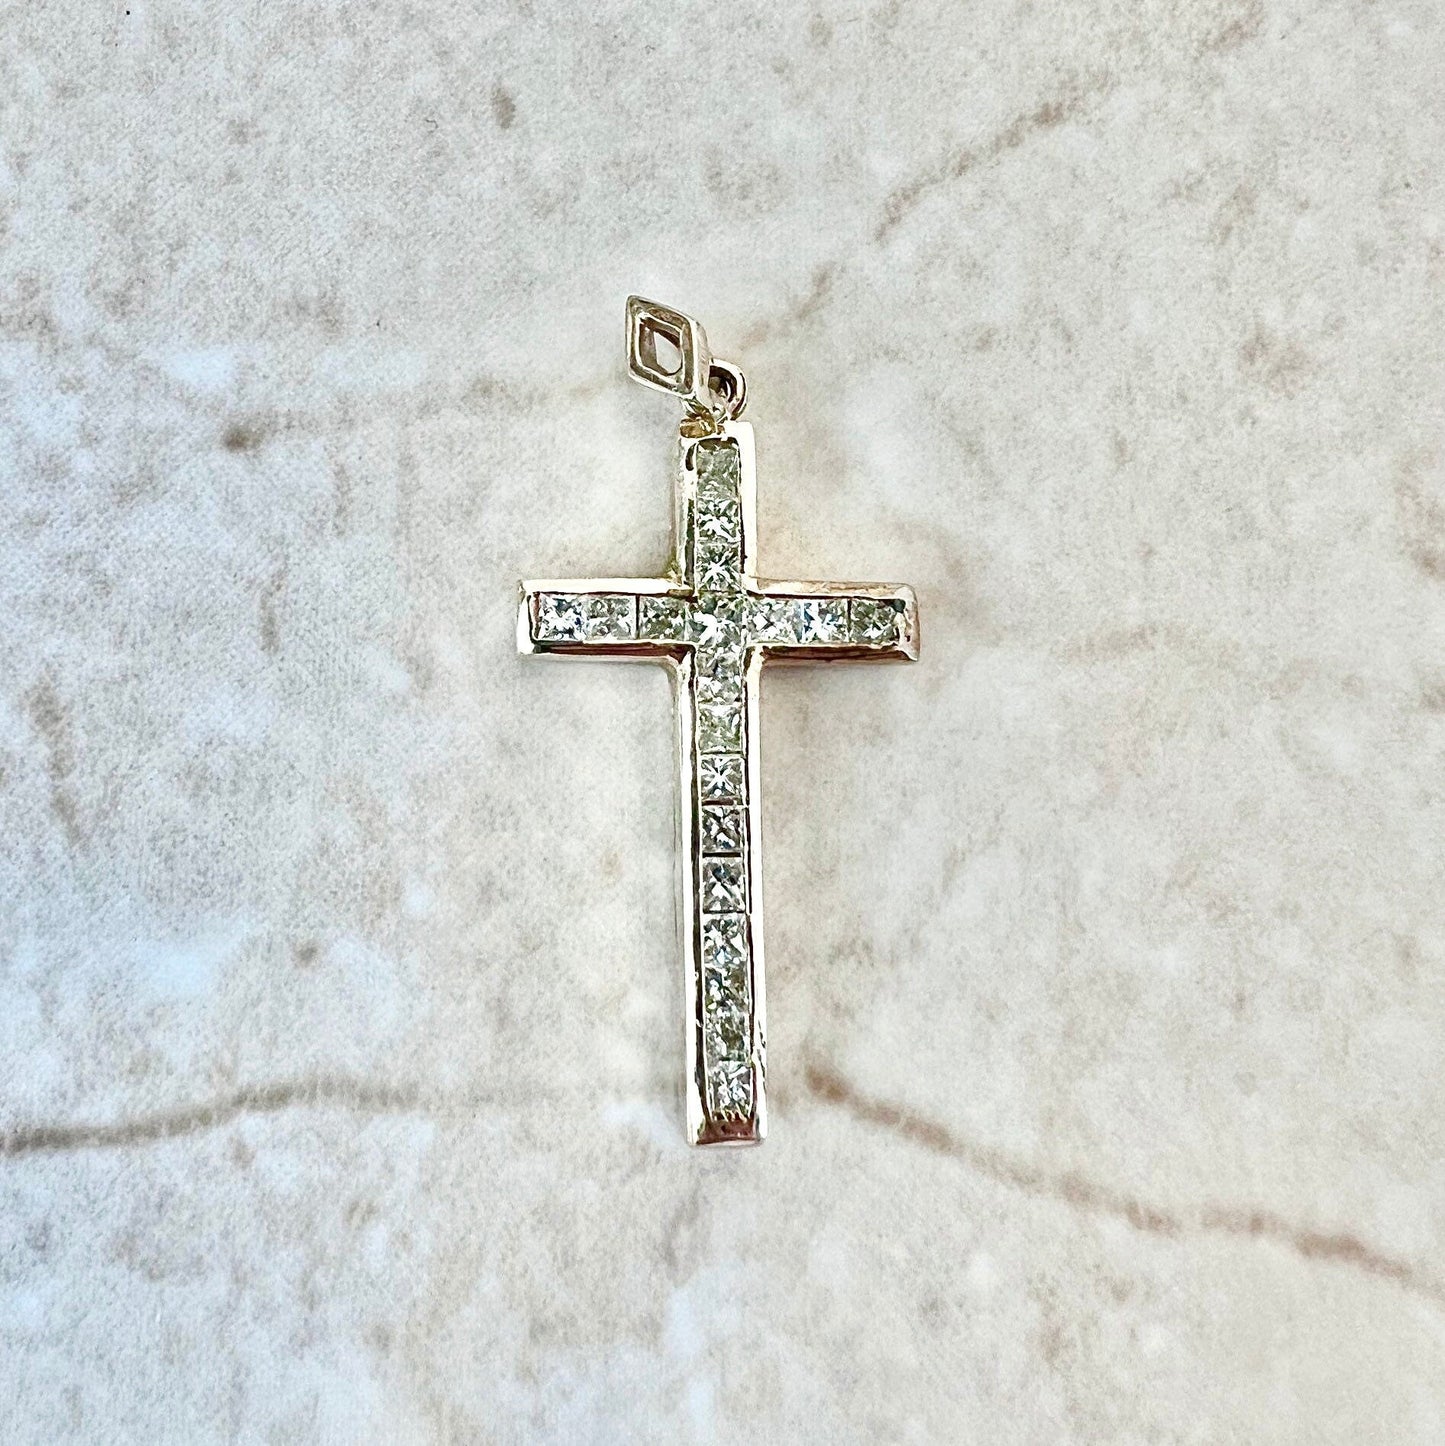 Vintage 14K Diamond Cross Pendant Necklace - Yellow Gold Diamond Cross - Christian Pendant -Religious Jewelry -Best Gift For Her